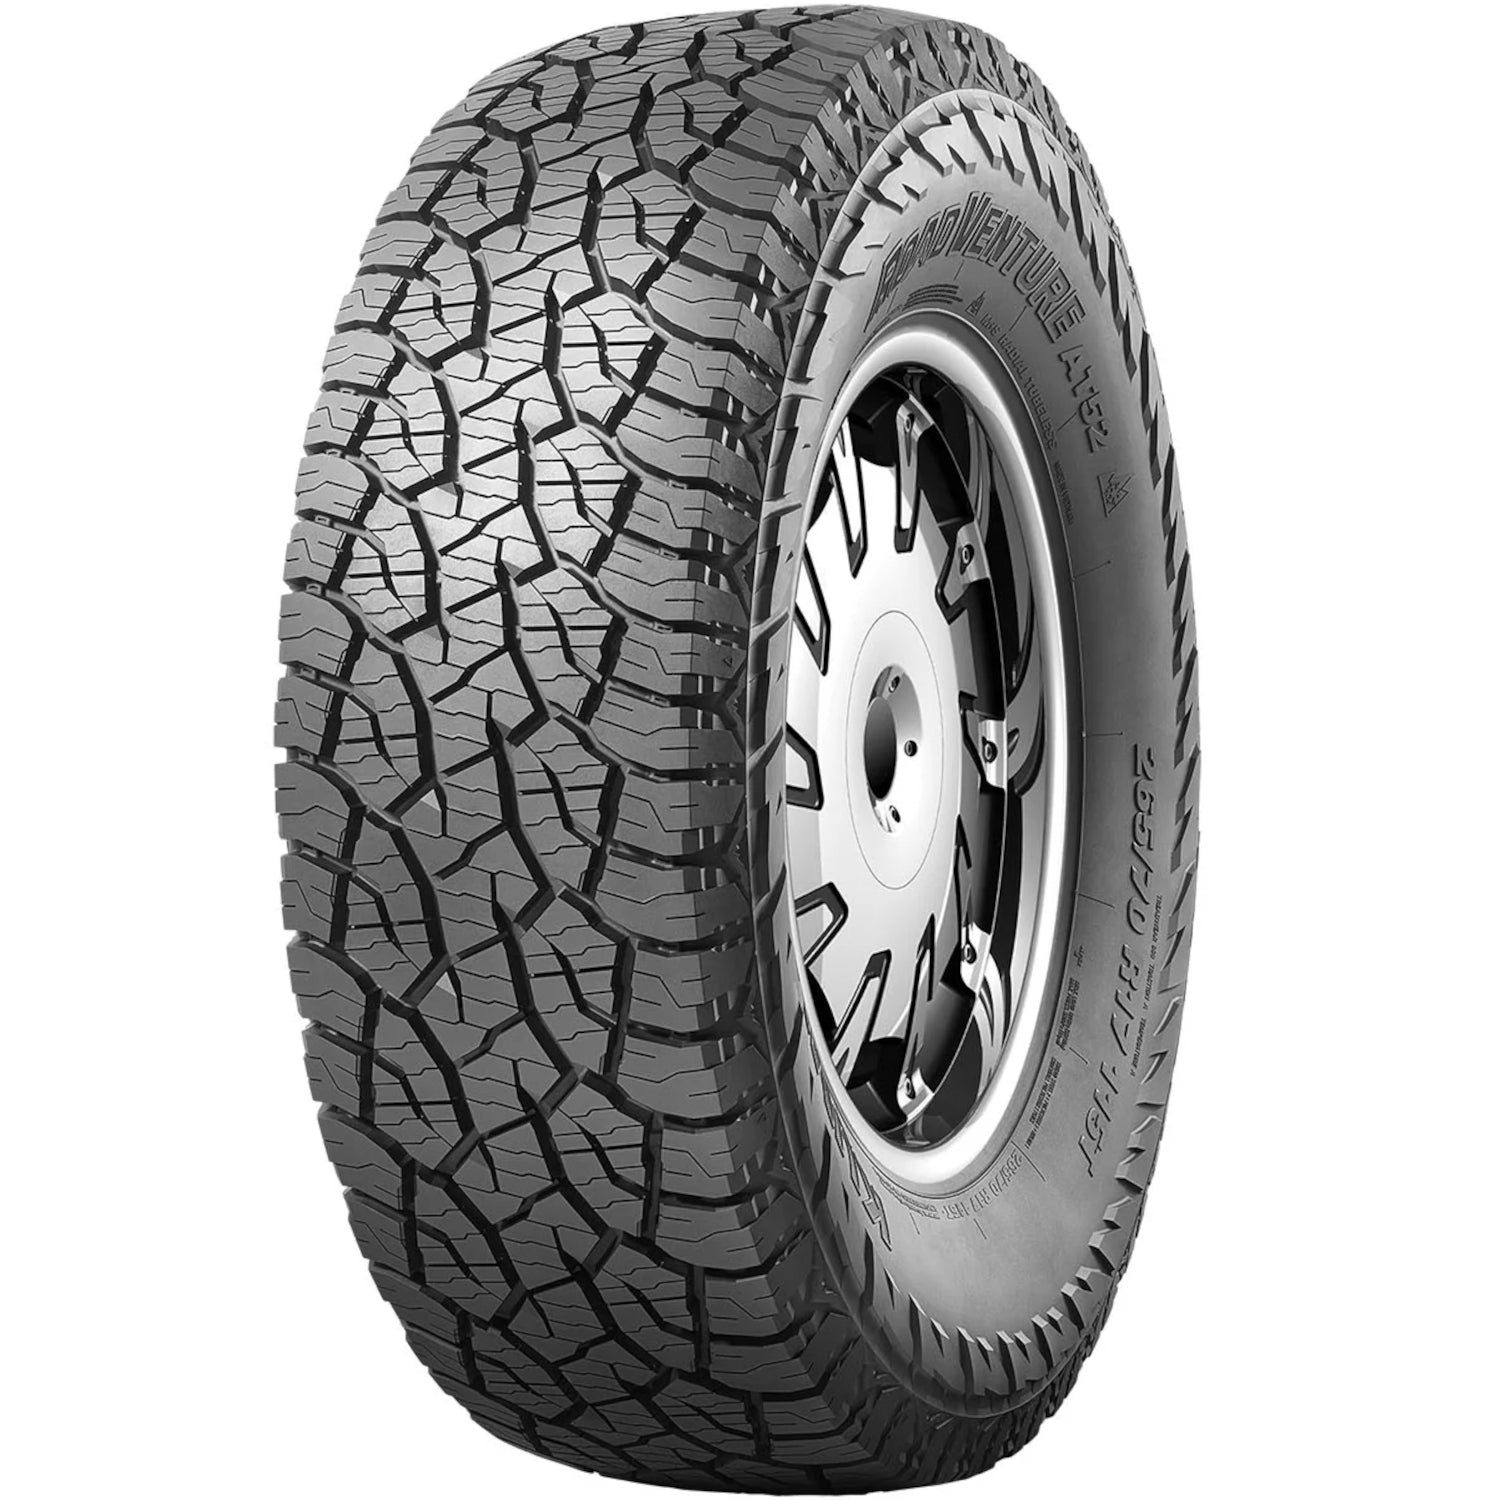 KUMHO ROAD VENTURE AT52 LT295/70R18 (34.3X11.6R 18) Tires